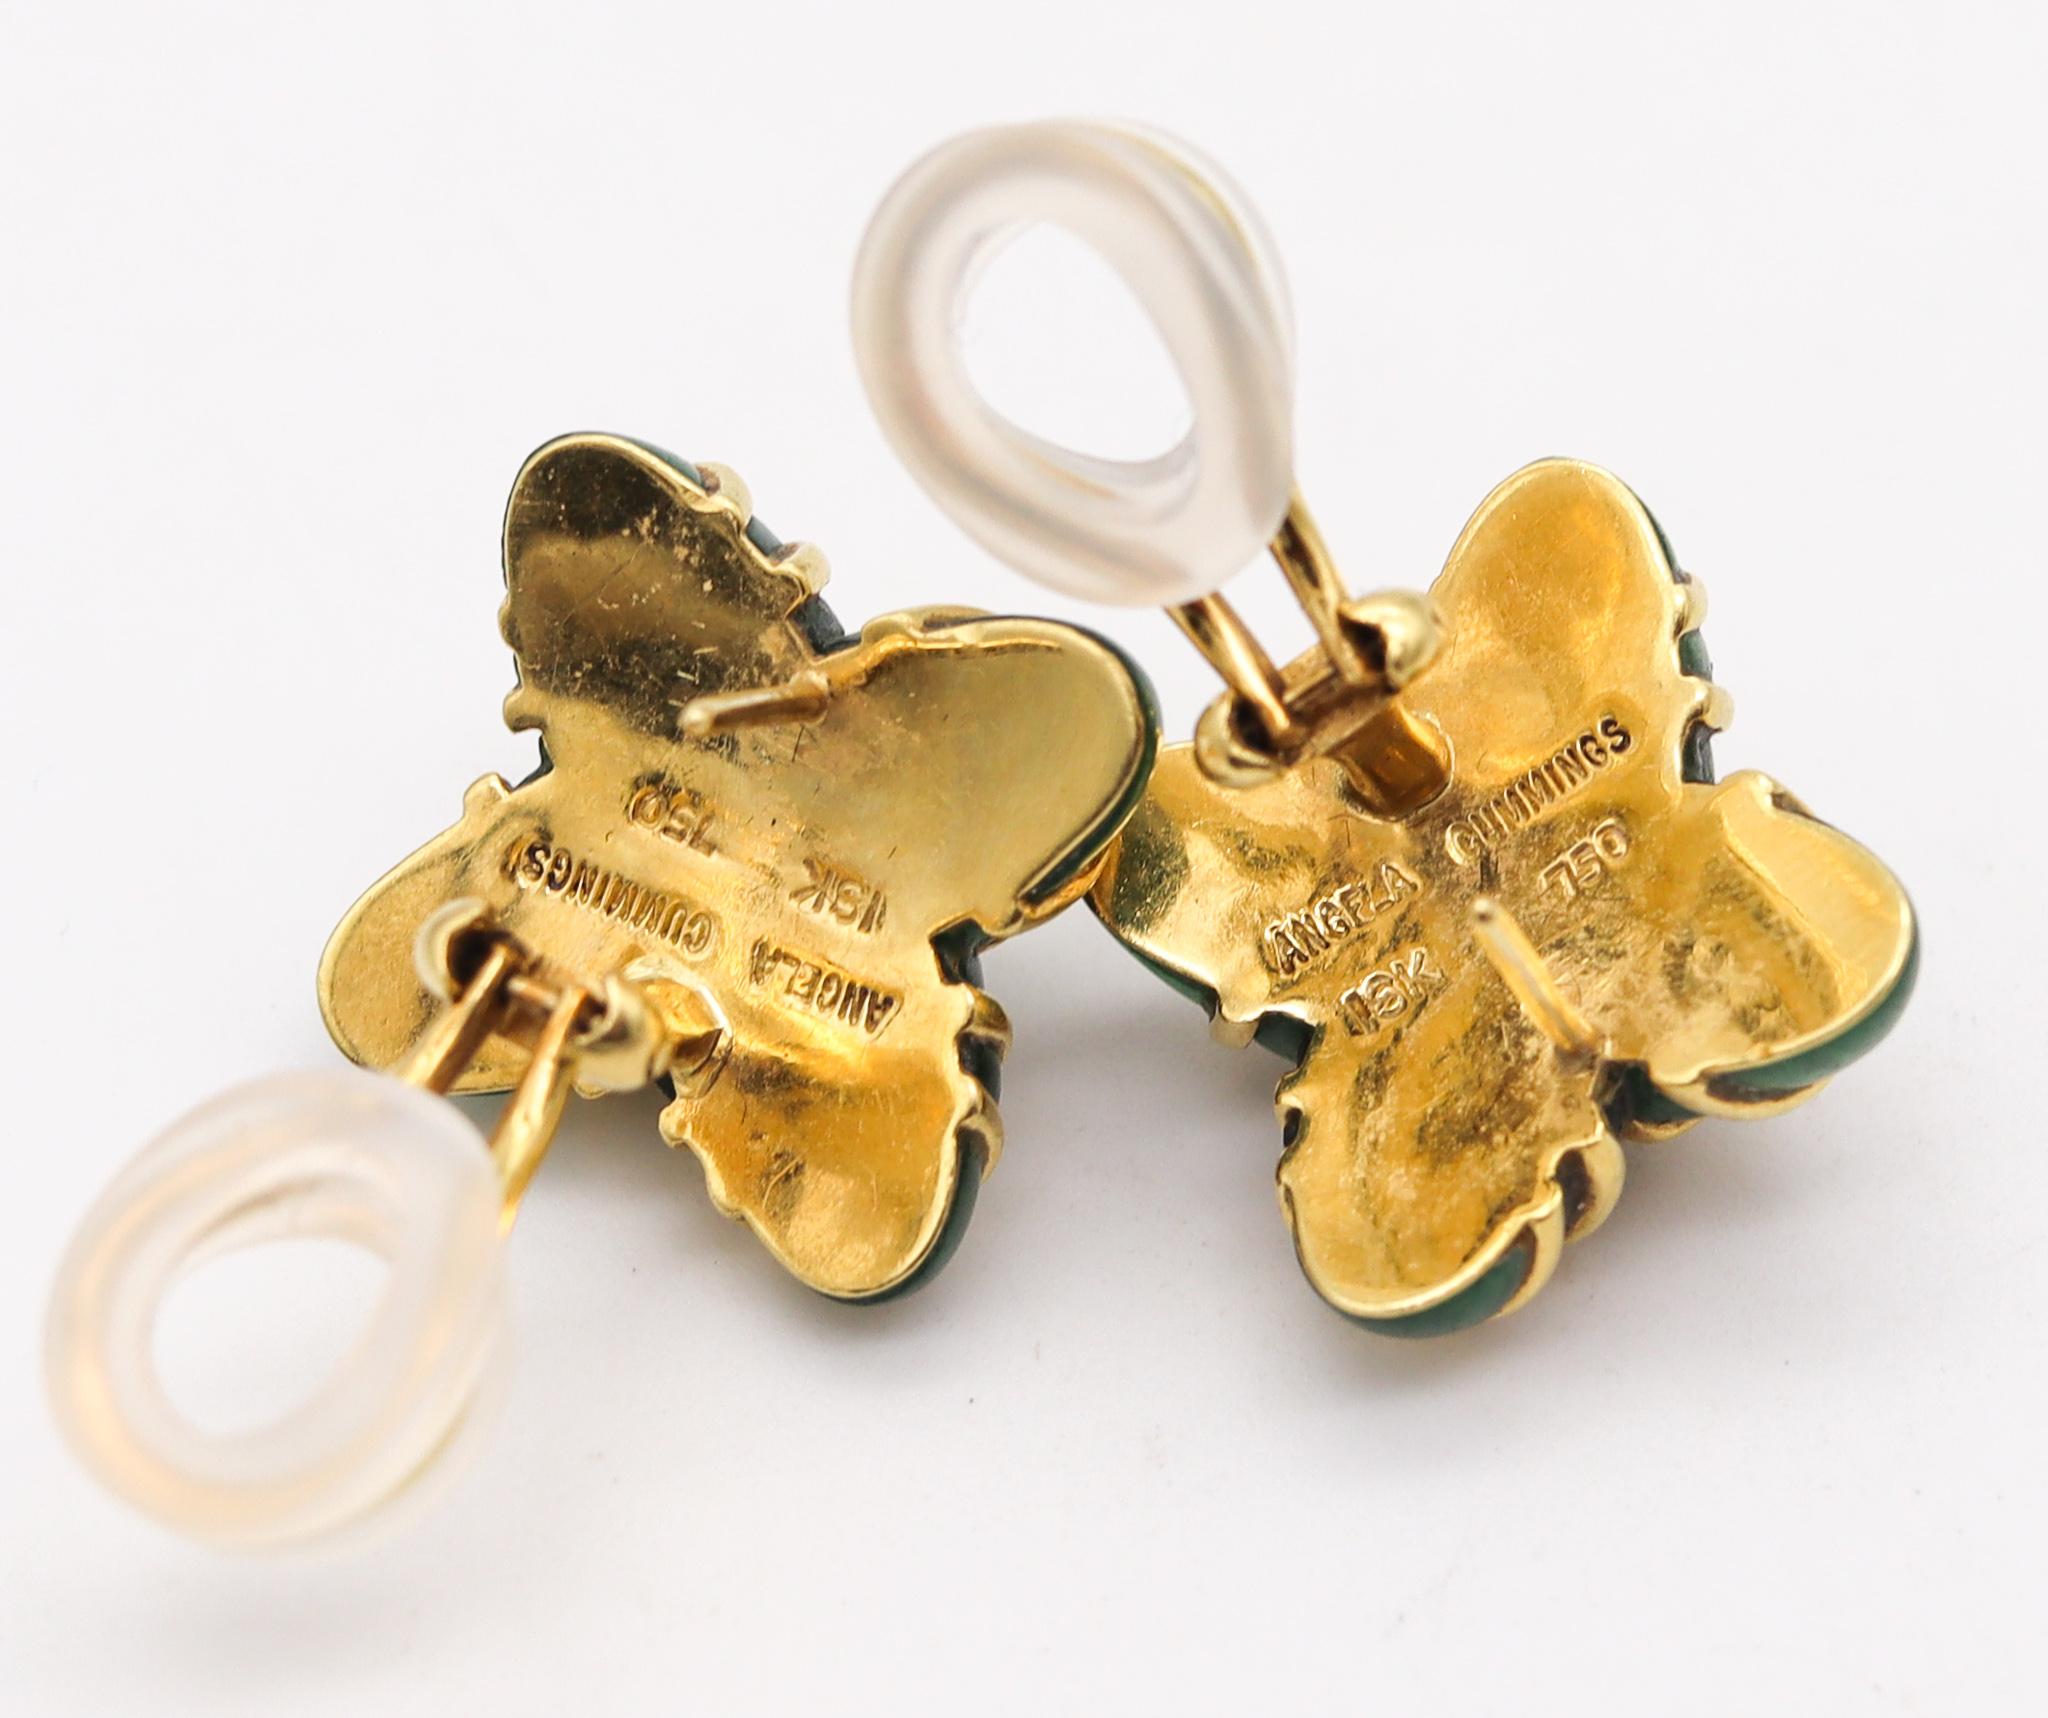 Modernist Angela Cummings Studios Criss Cross Clip Earrings in 18kt Gold with Green Jade